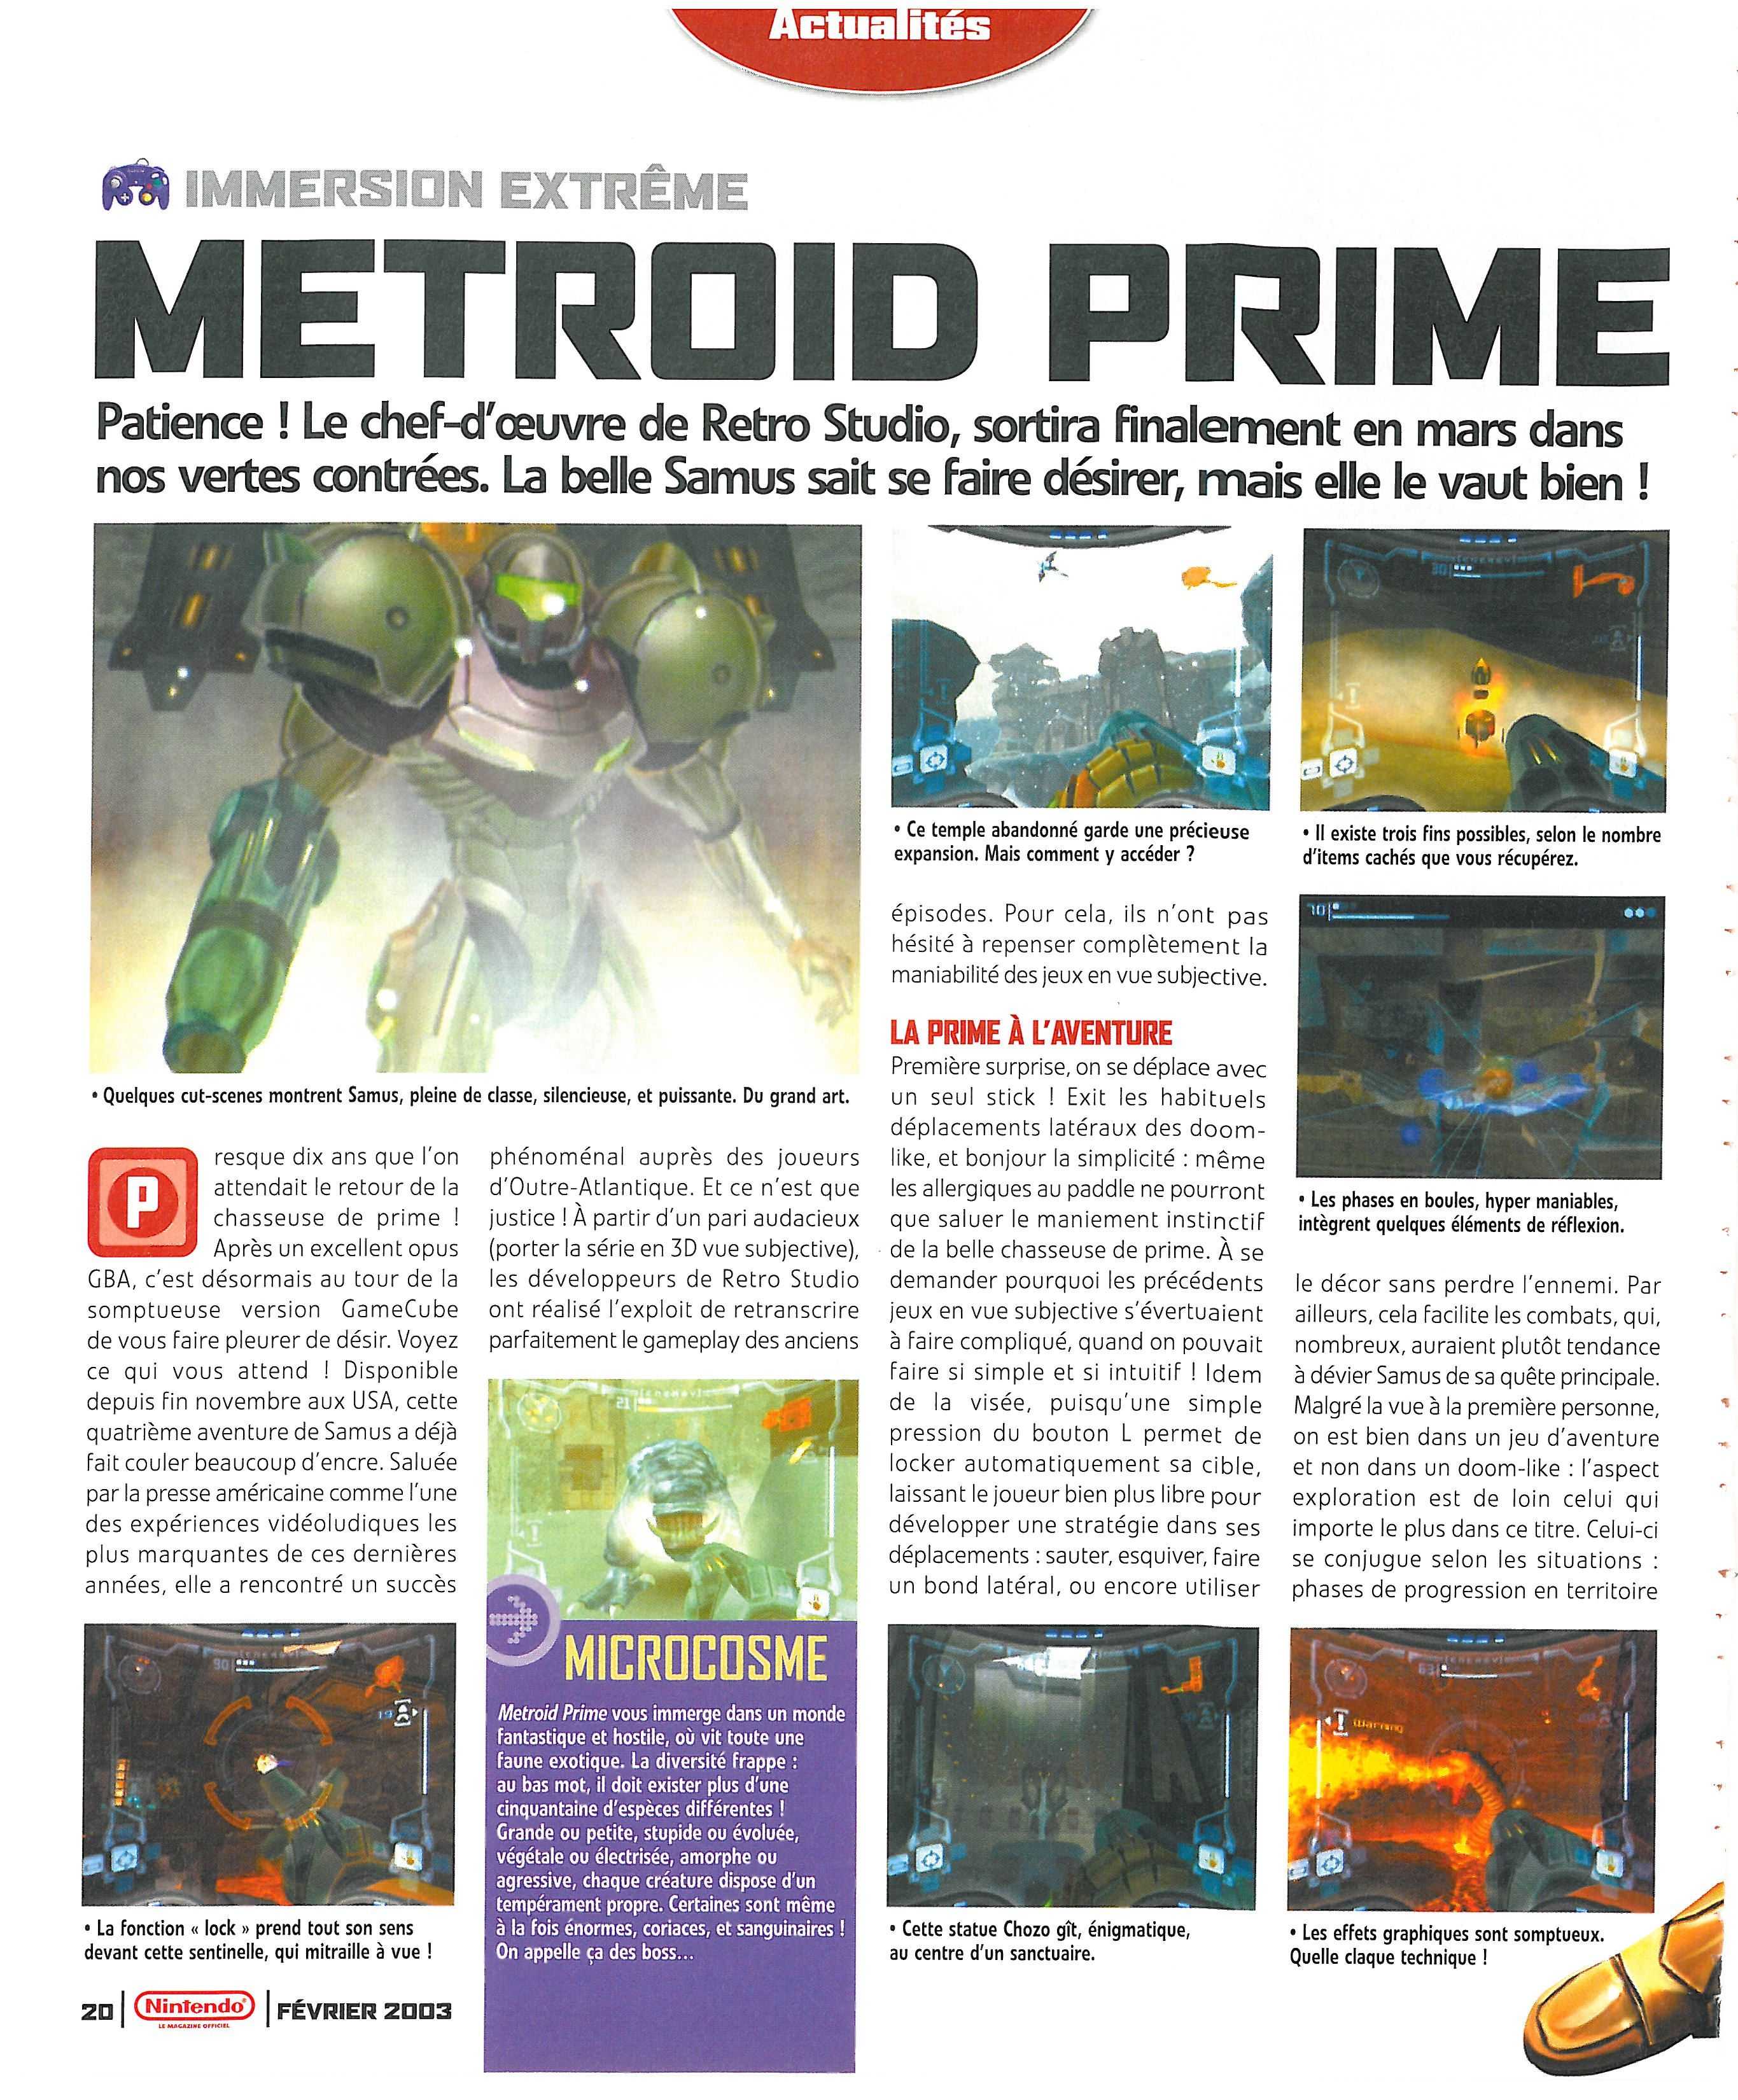 [TEST] Metroid Prime Remastered (Switch) Le%20Magazine%20Officiel%20Nintendo%20N%C2%B0009%20-%20Page%20020%20%28F%C3%A9vrier%202003%29